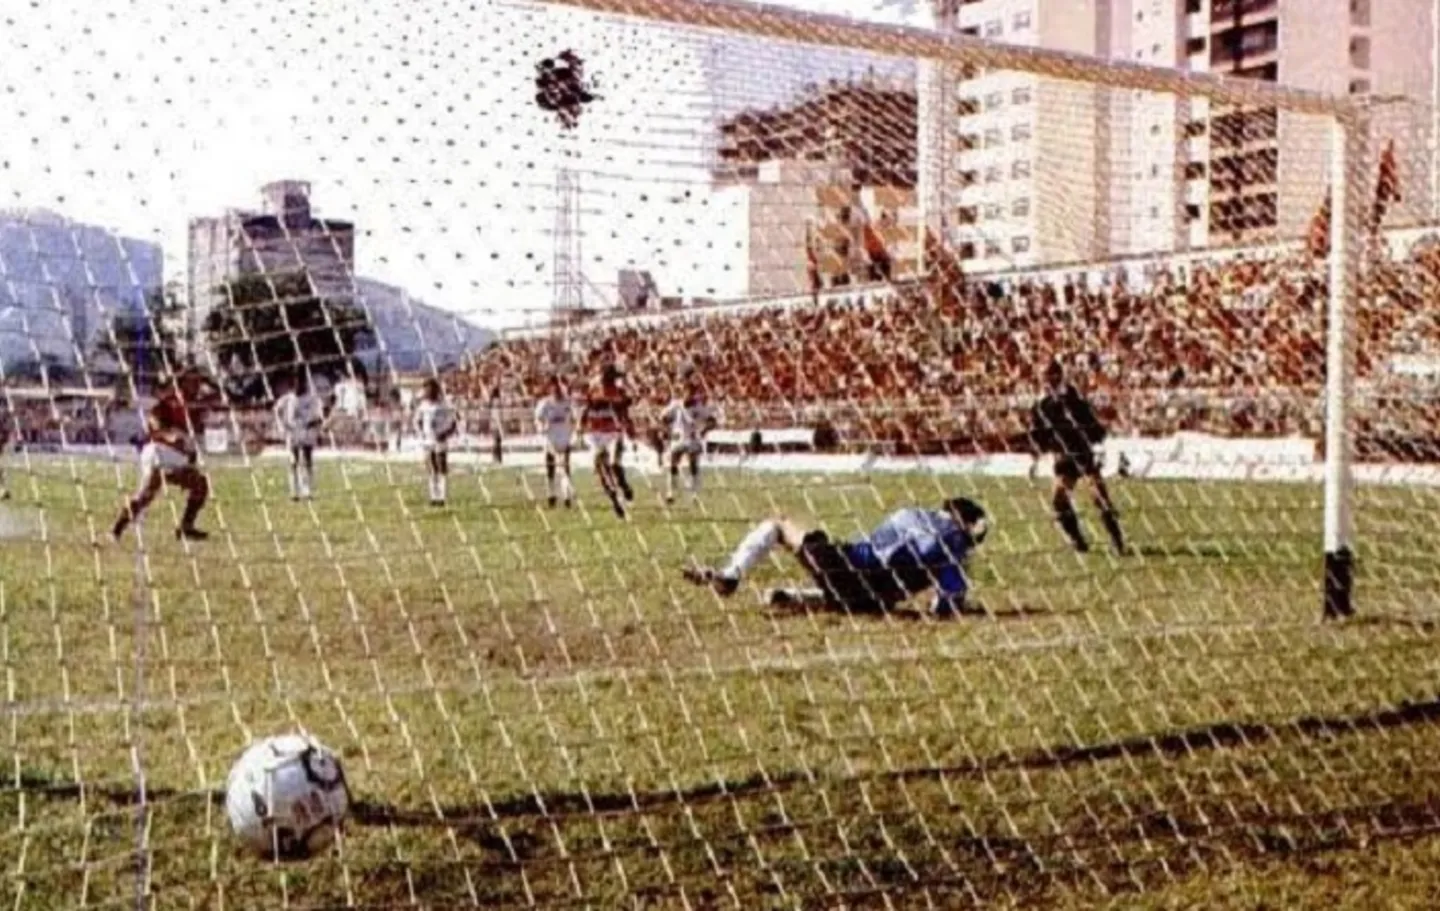 Estádio Caio Martins - Wikipedia